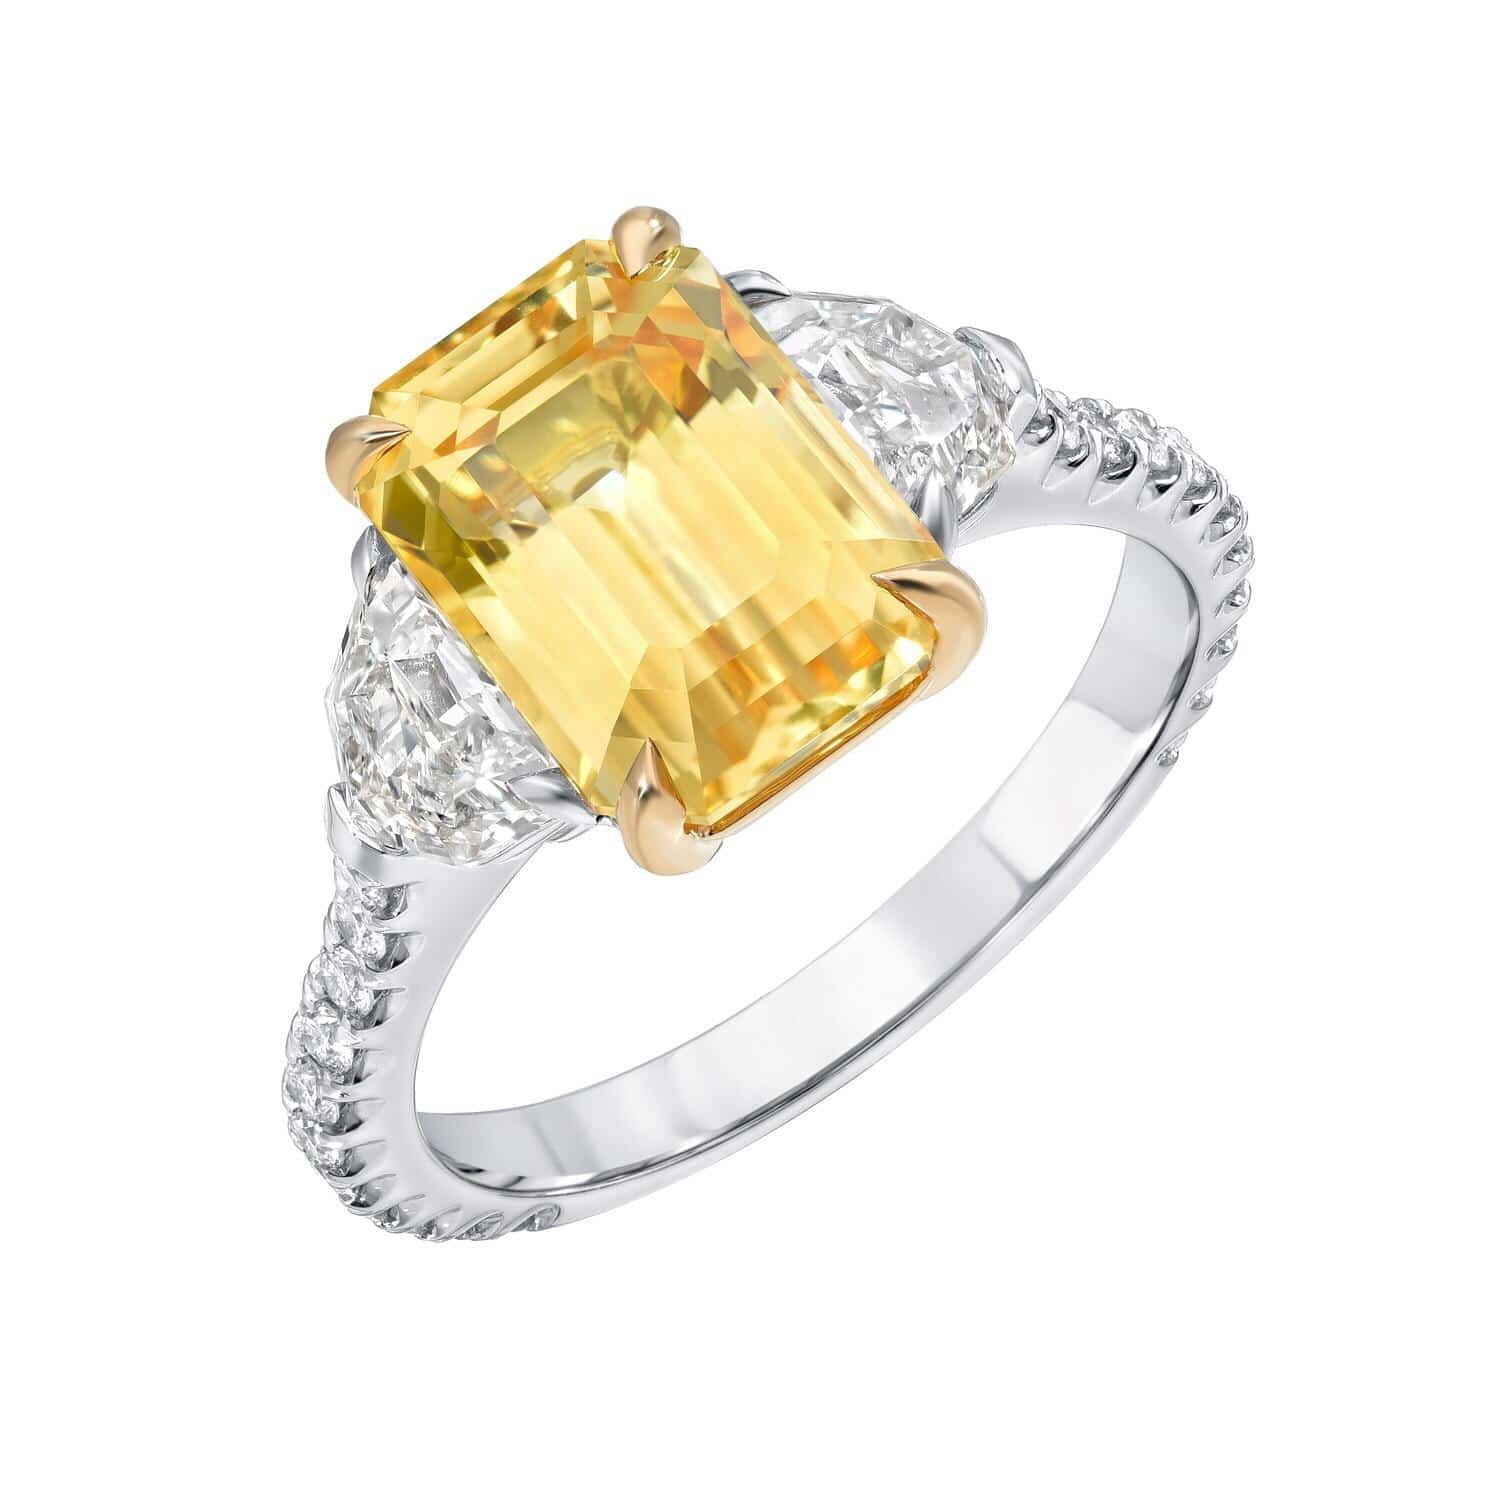 Natural Unheated Ceylon Yellow Sapphire Diamond Ring 4.47 Carat